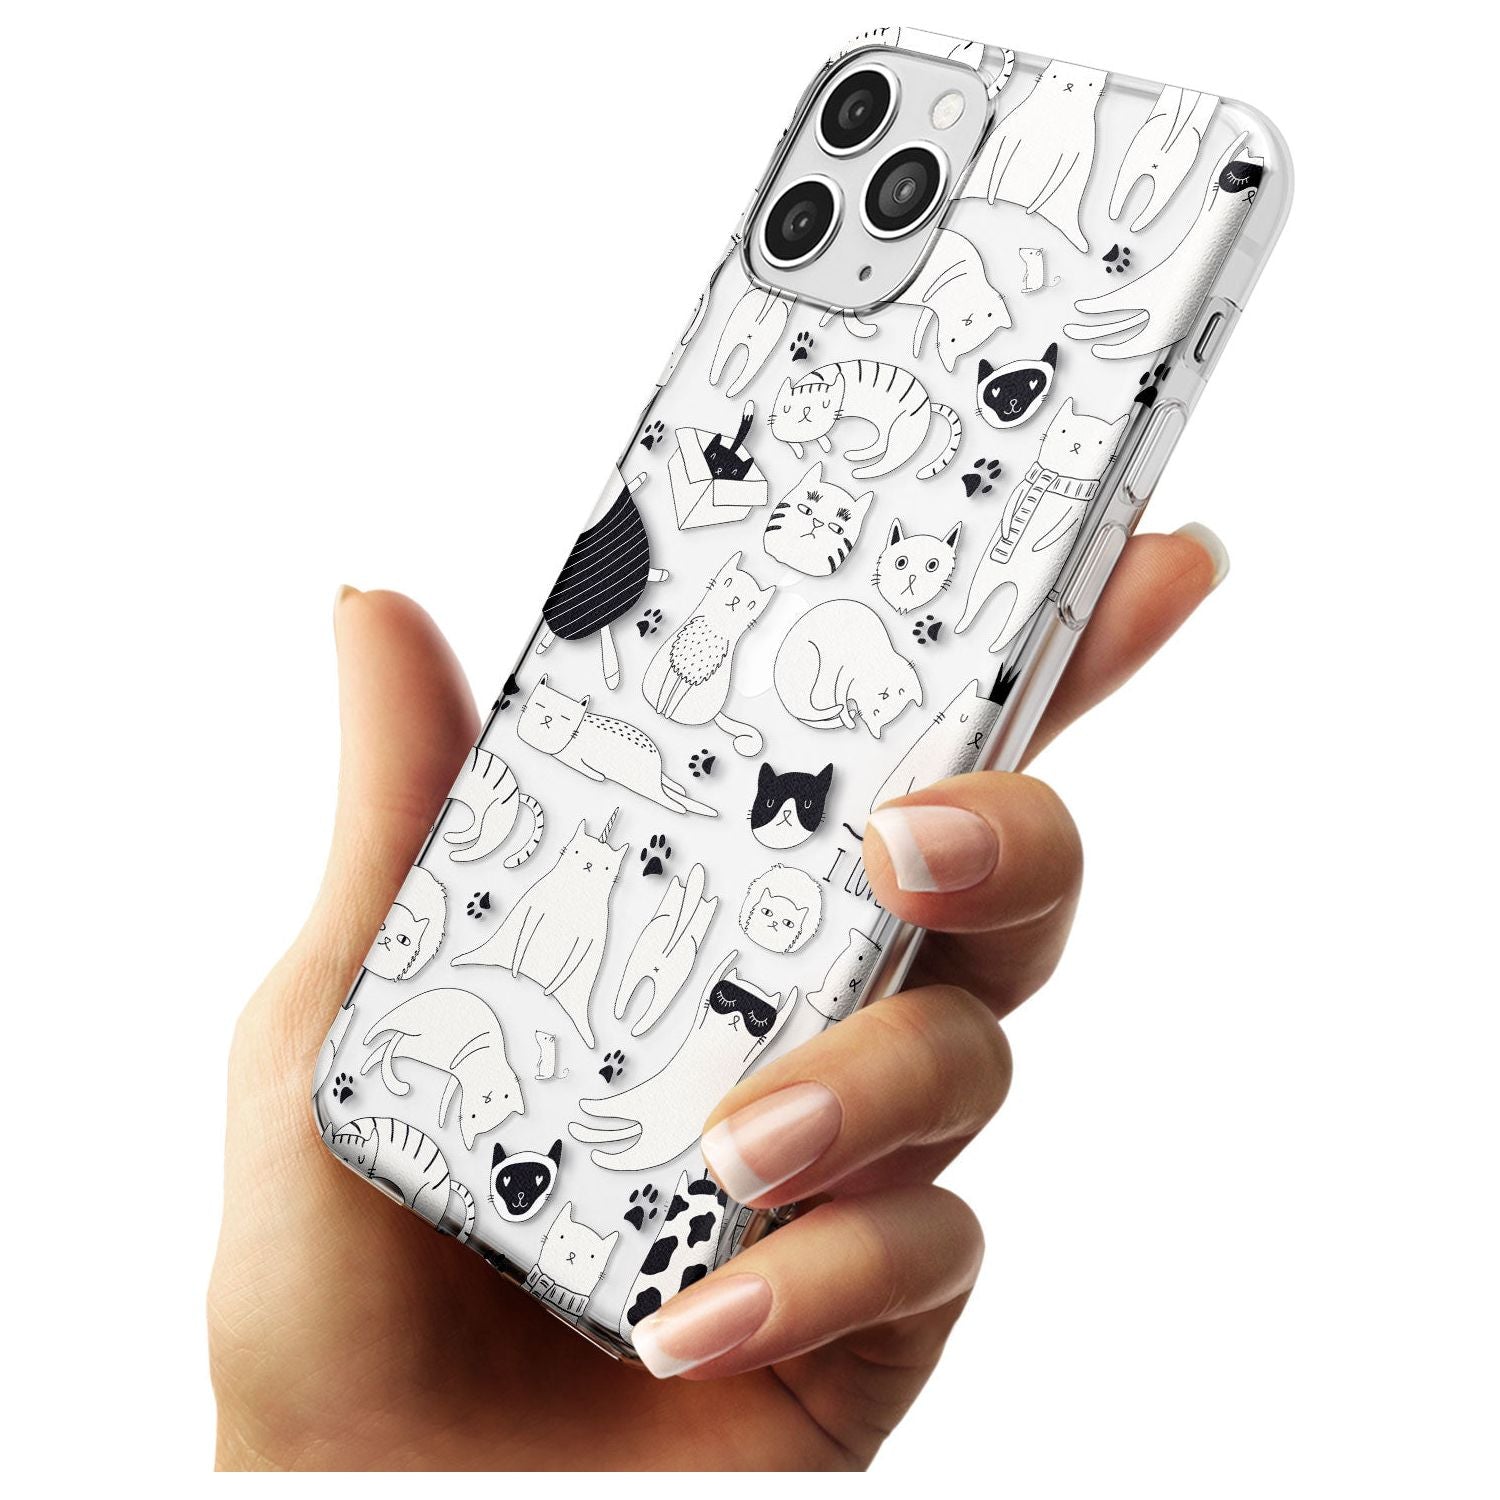 Cartoon Cat Collage - Black & White Black Impact Phone Case for iPhone 11 Pro Max